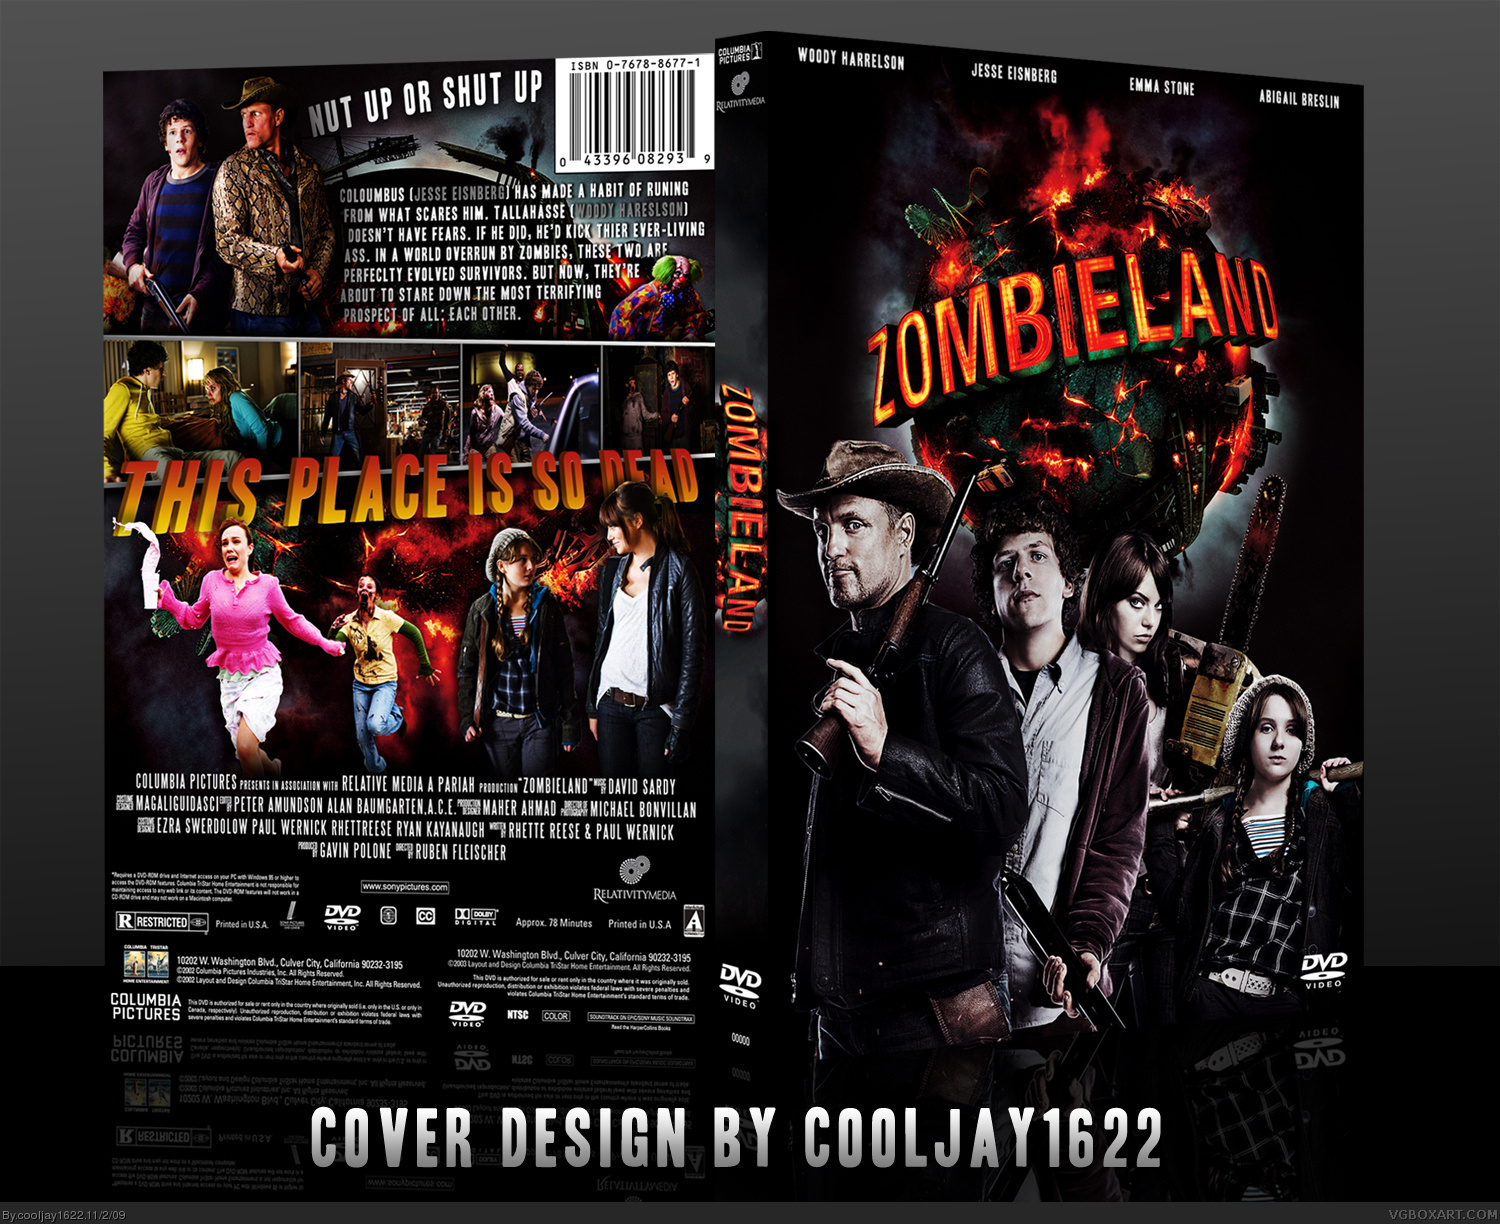 Zombieland [DVD] [2010]